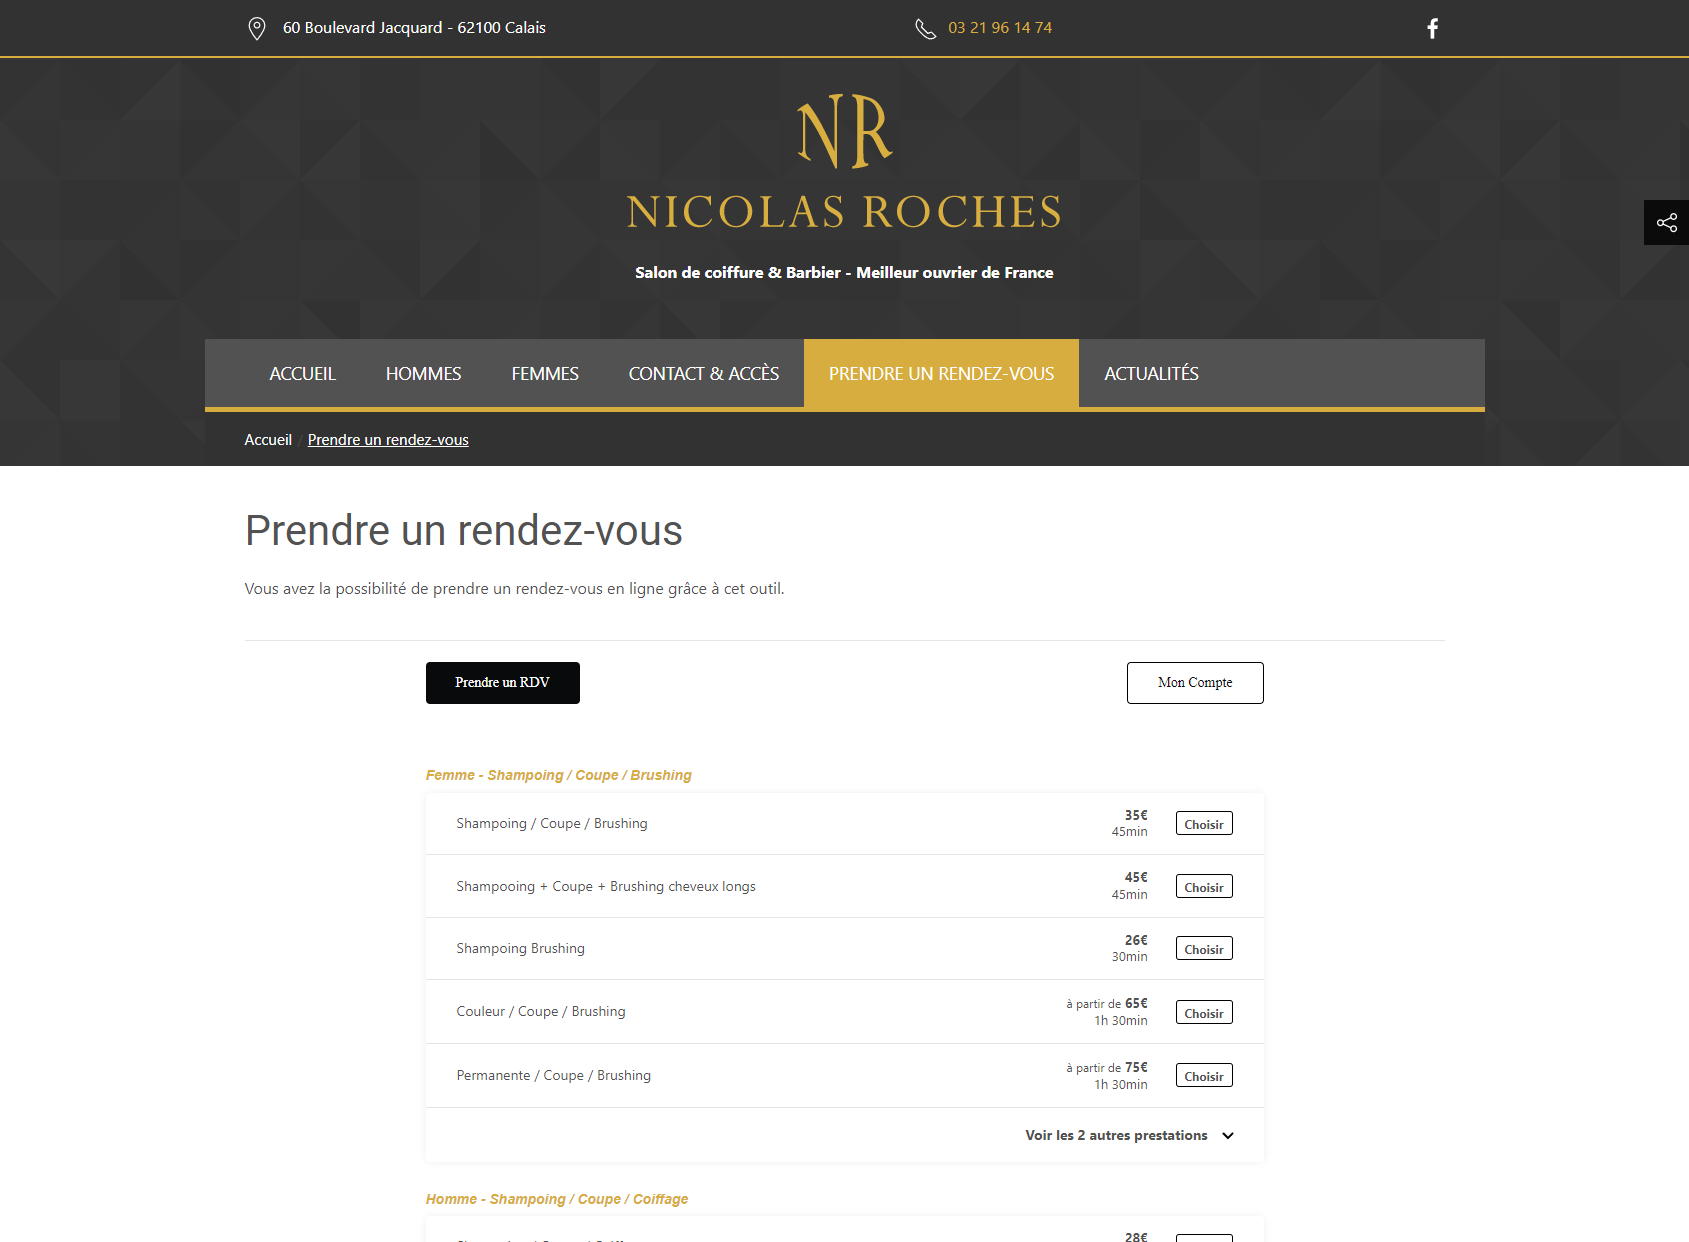 NICOLAS ROCHES LOUNGE